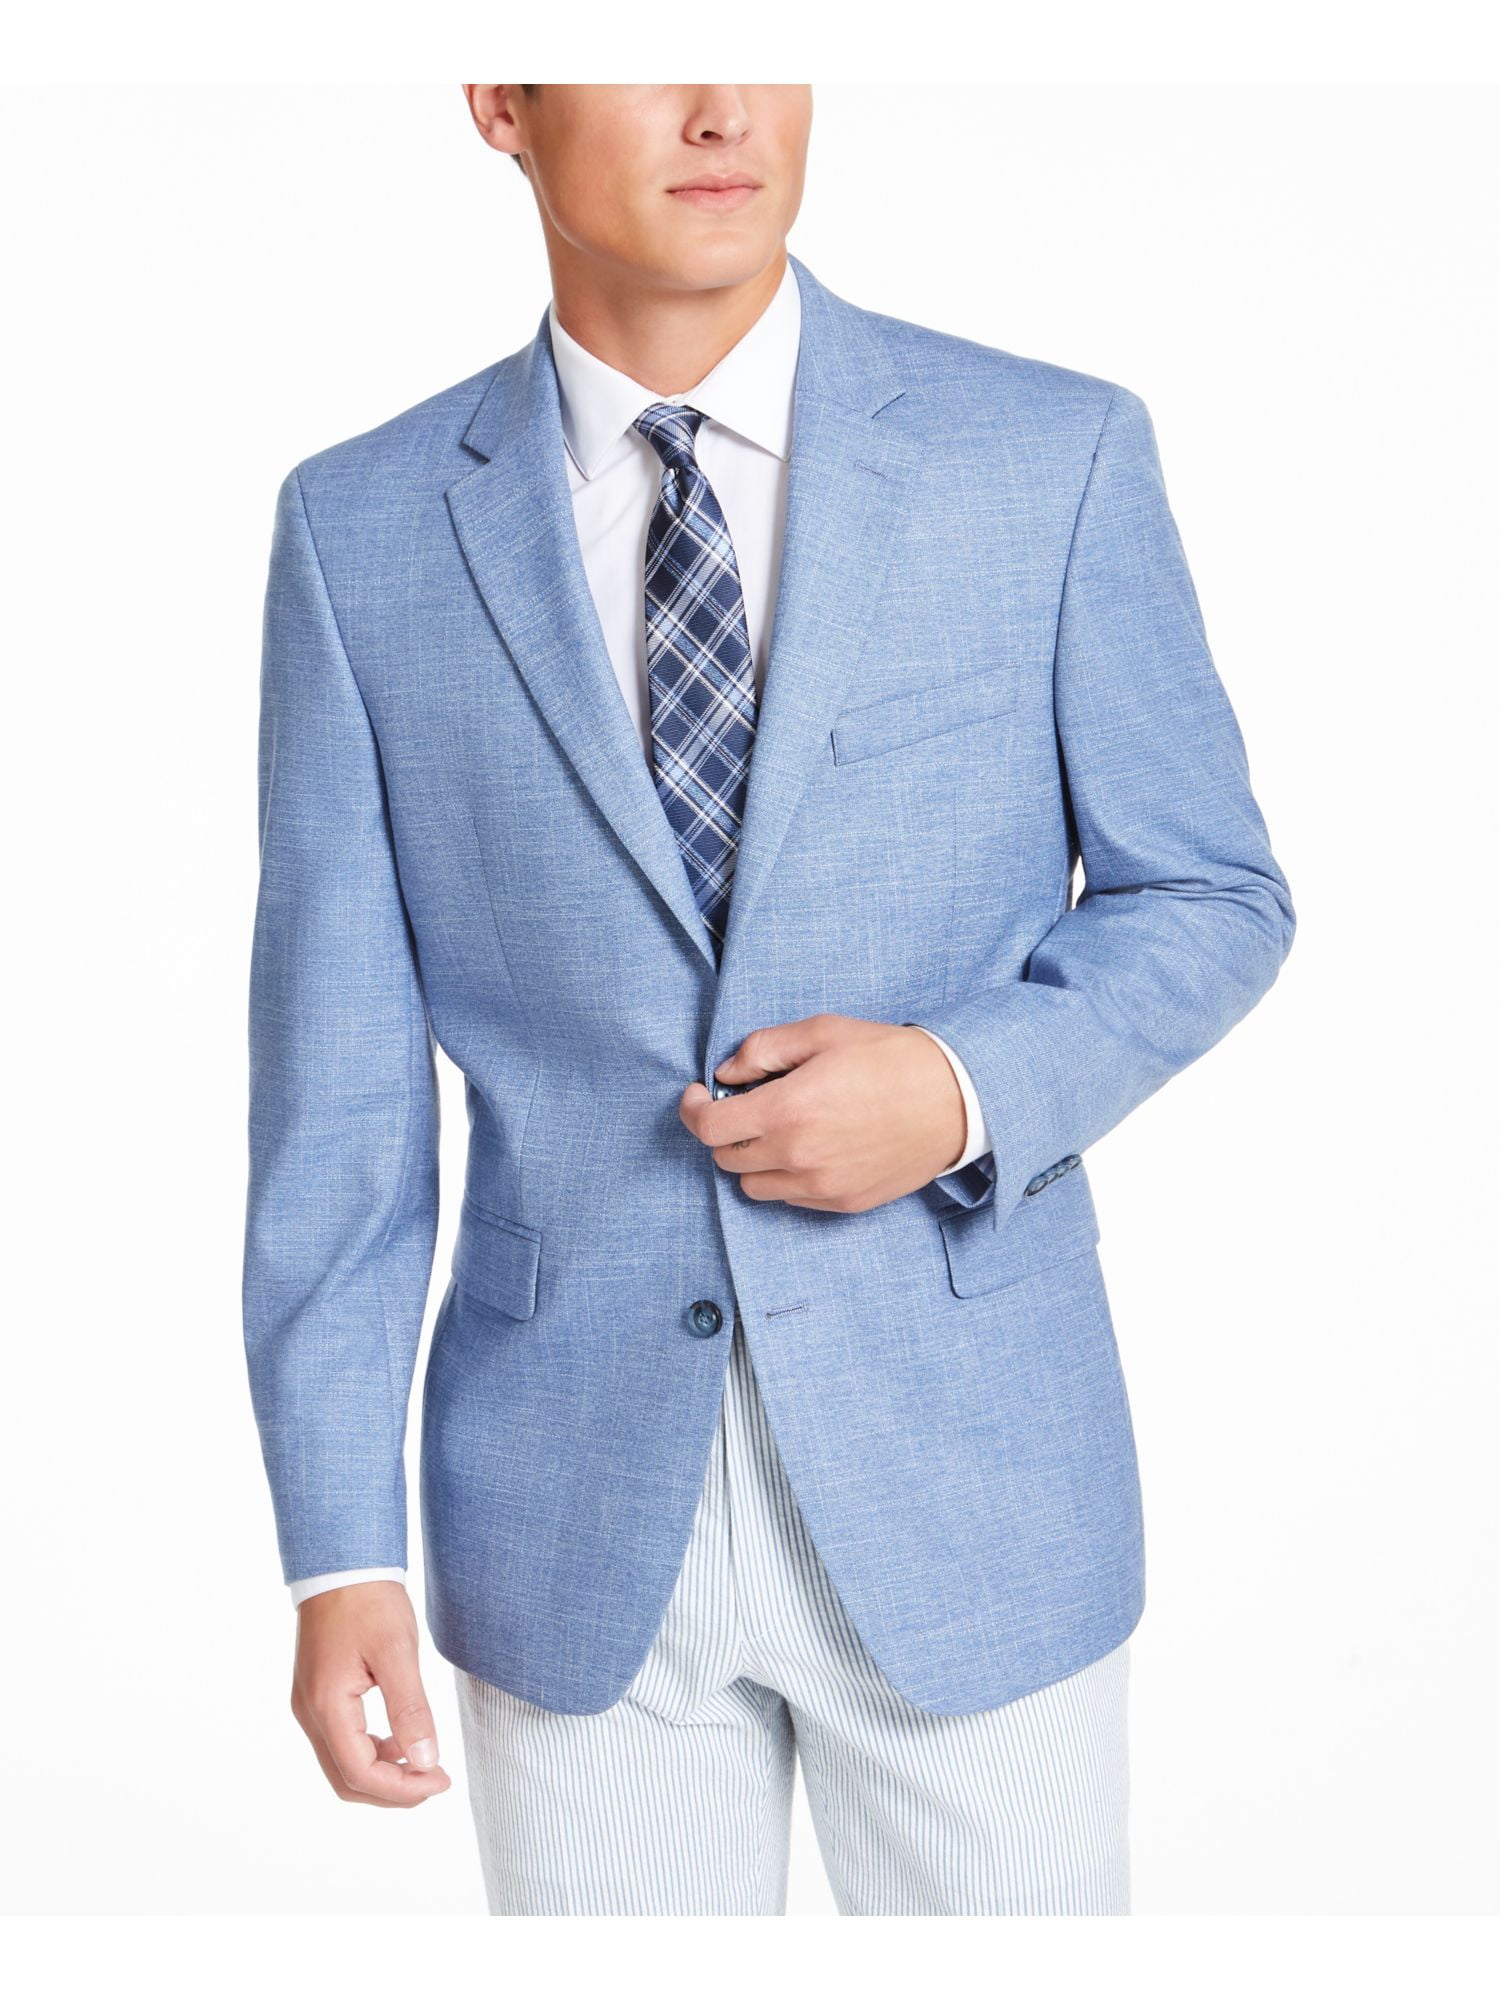 tommy hilfiger light blue suit